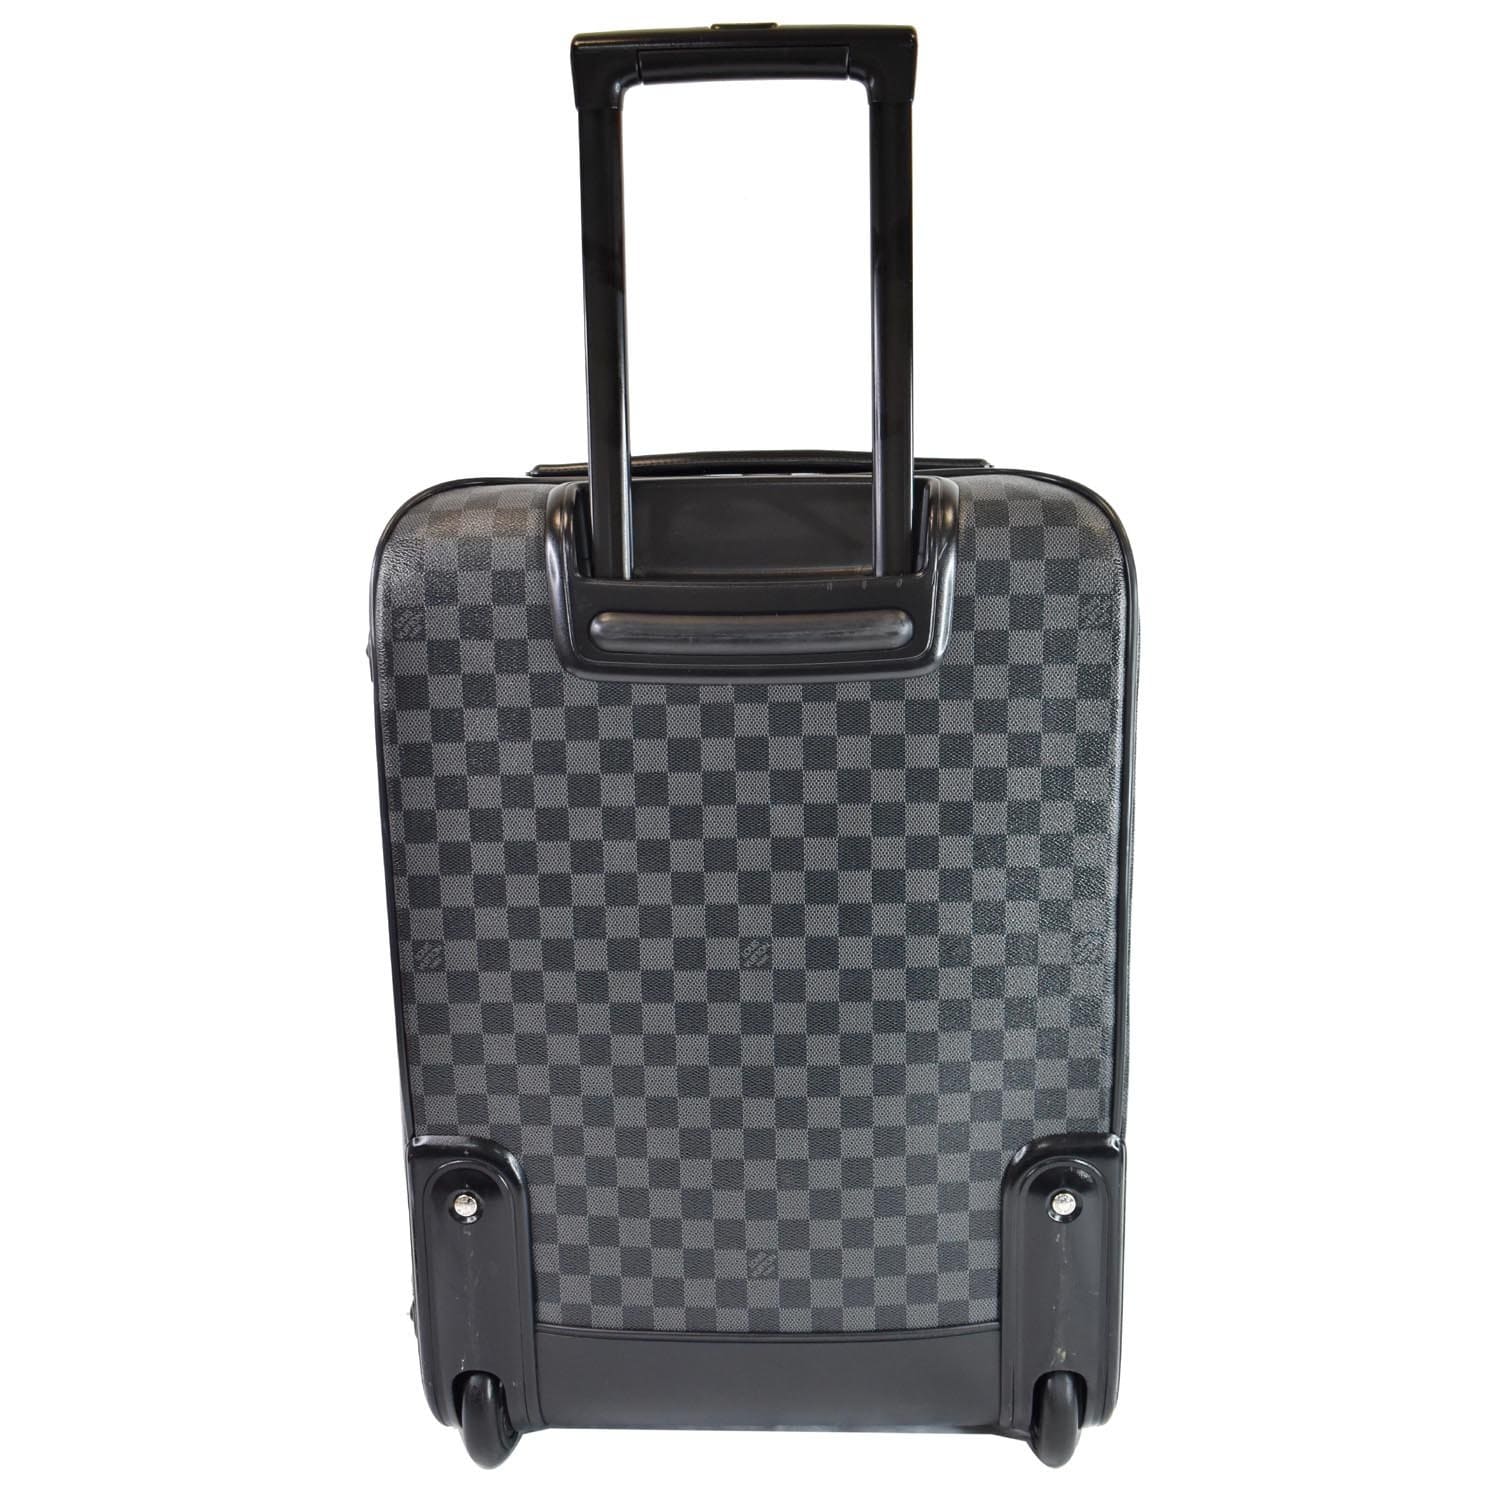 Louis Vuitton Black Designer Luggage Bag, For Travelling Purpose,  Size/Dimension: Large